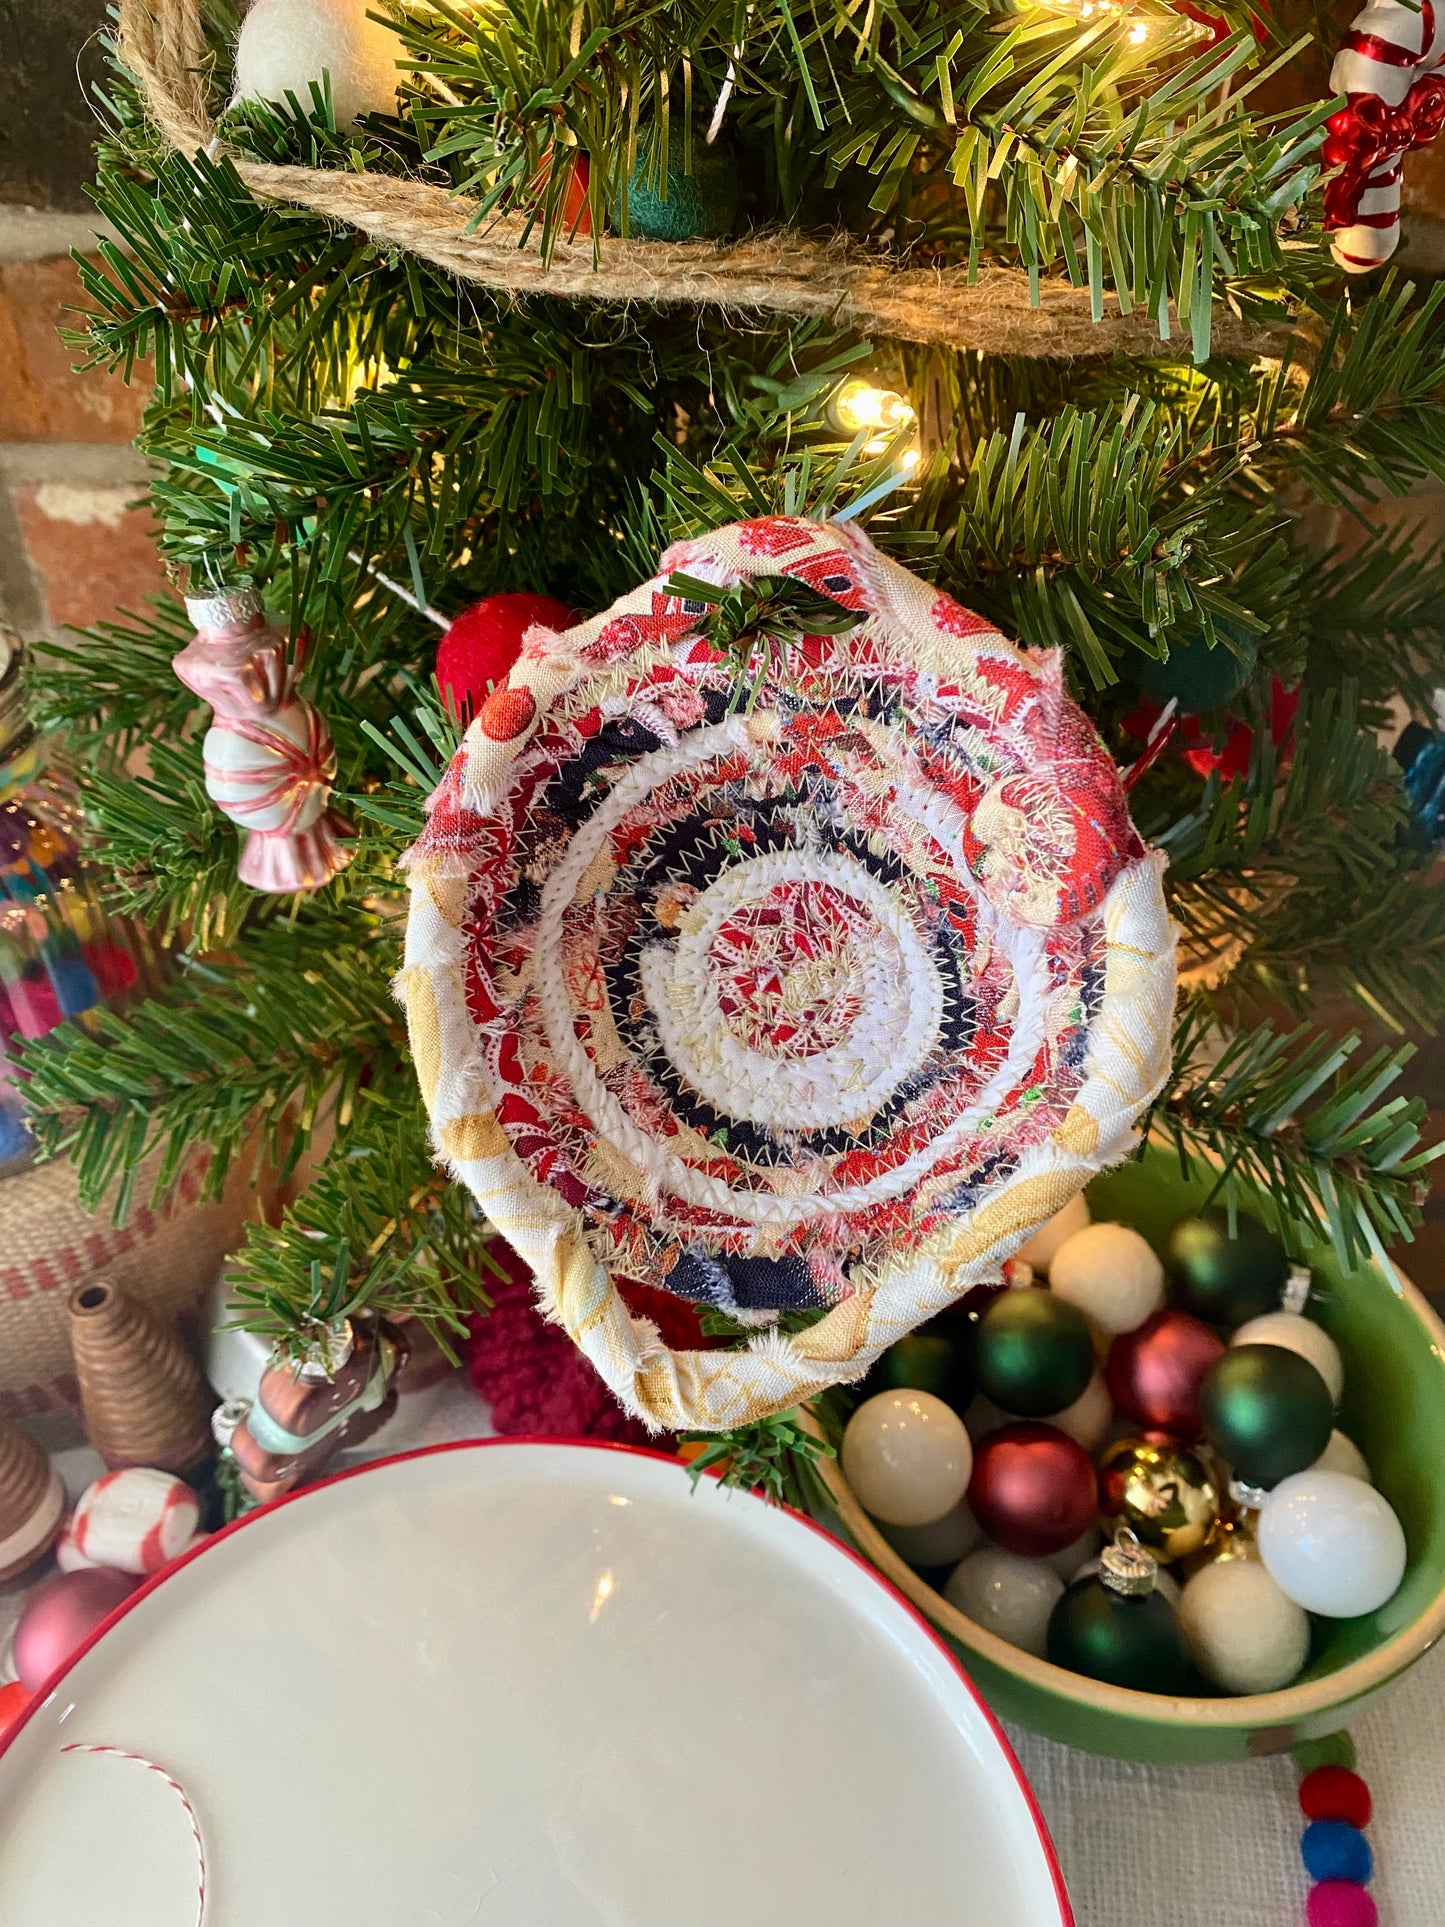 Miniature Egg Basket Ornament/Decoration - Holiday